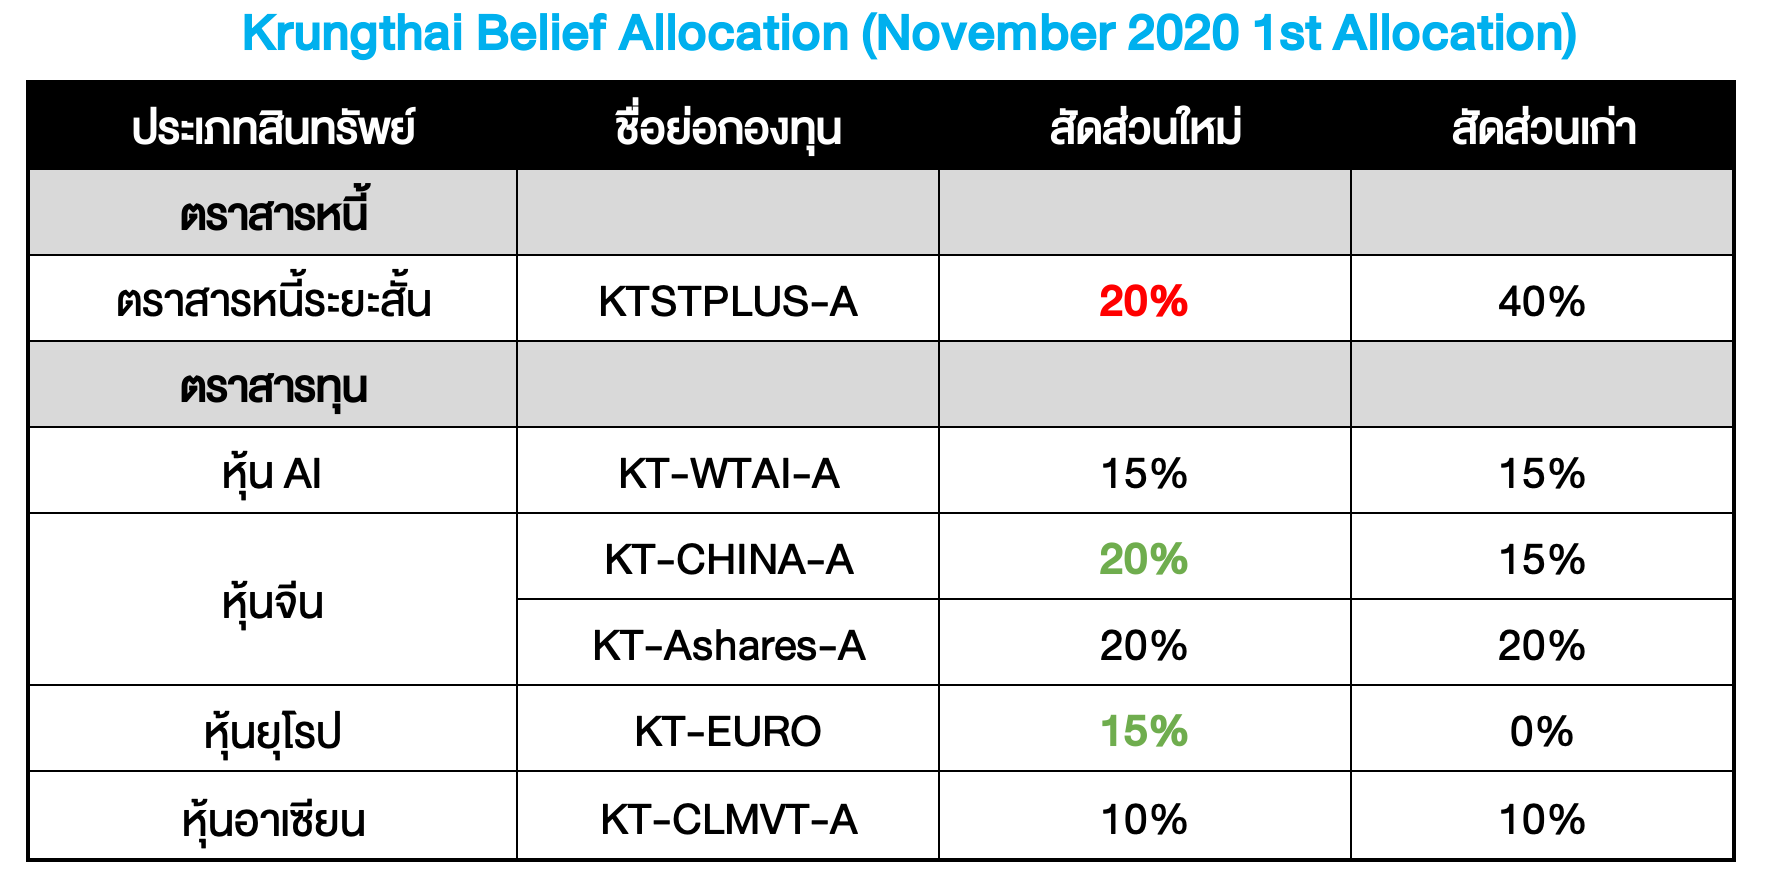 Krungthai Belief Allocation ปรับพอร์ตเดือน พ.ย. 2020 : เบรกธรรมชาติ